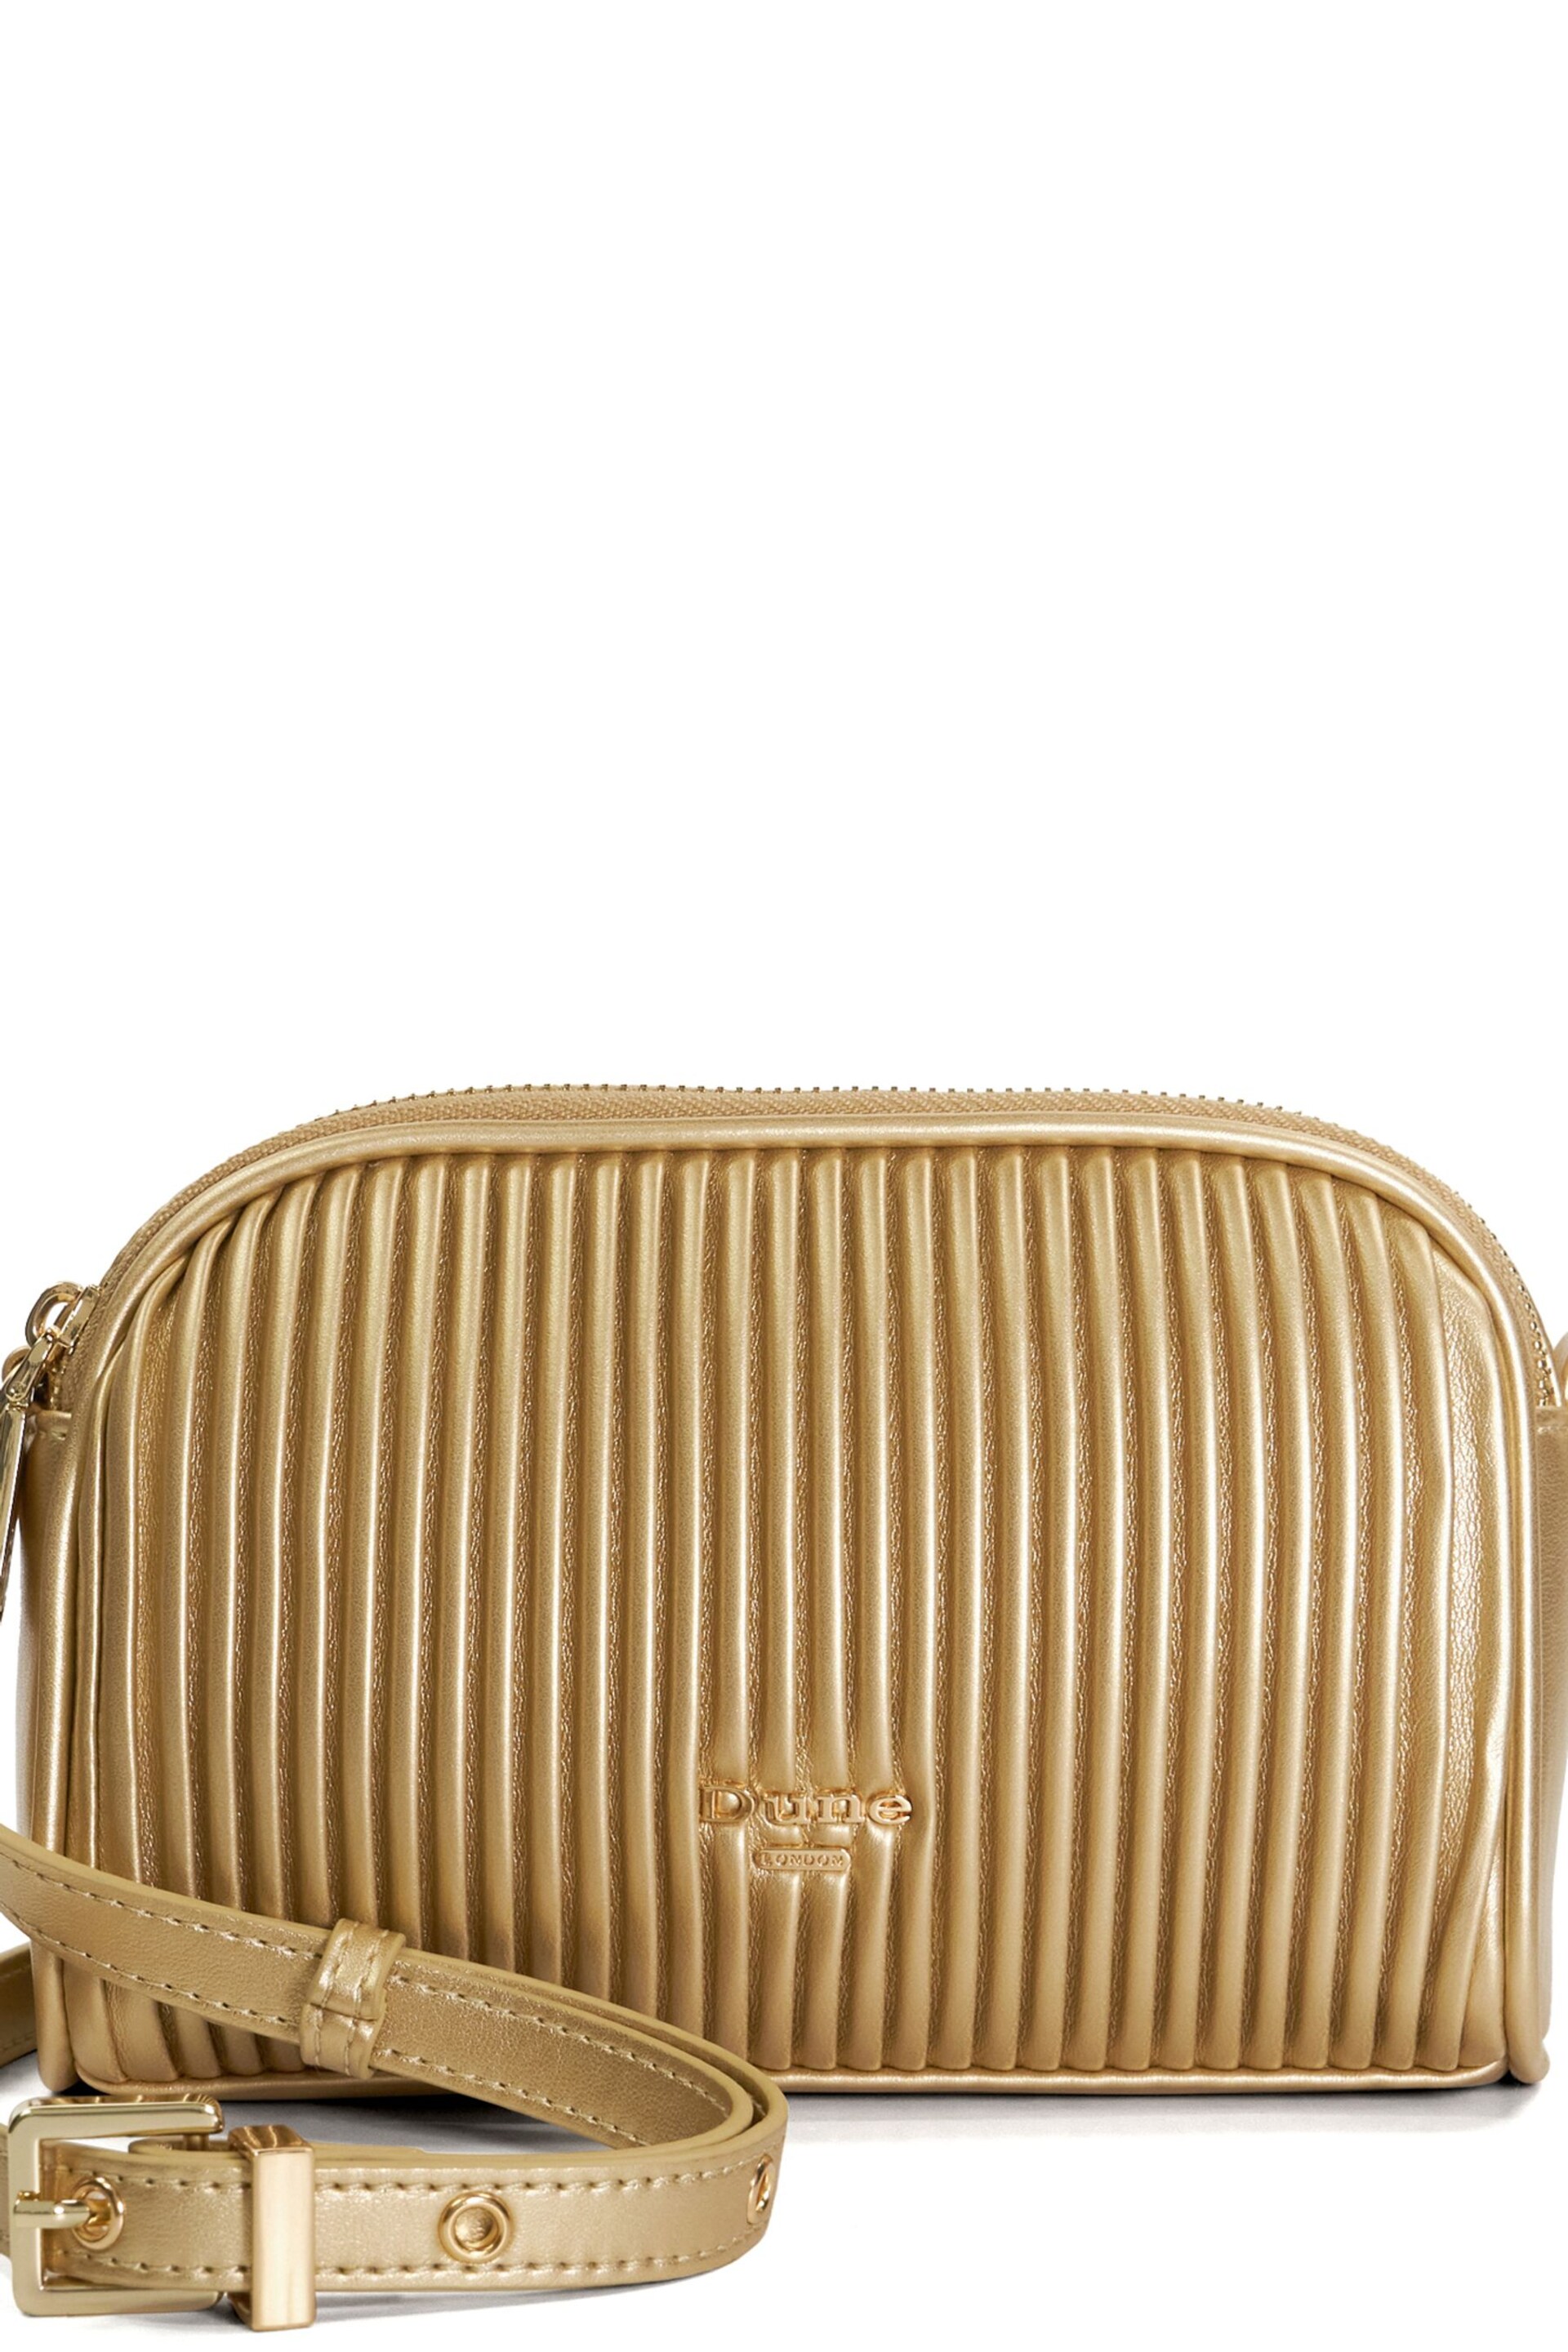 Dune London Gold Detail Pleat Cross-Body Mini Bag - Image 2 of 6